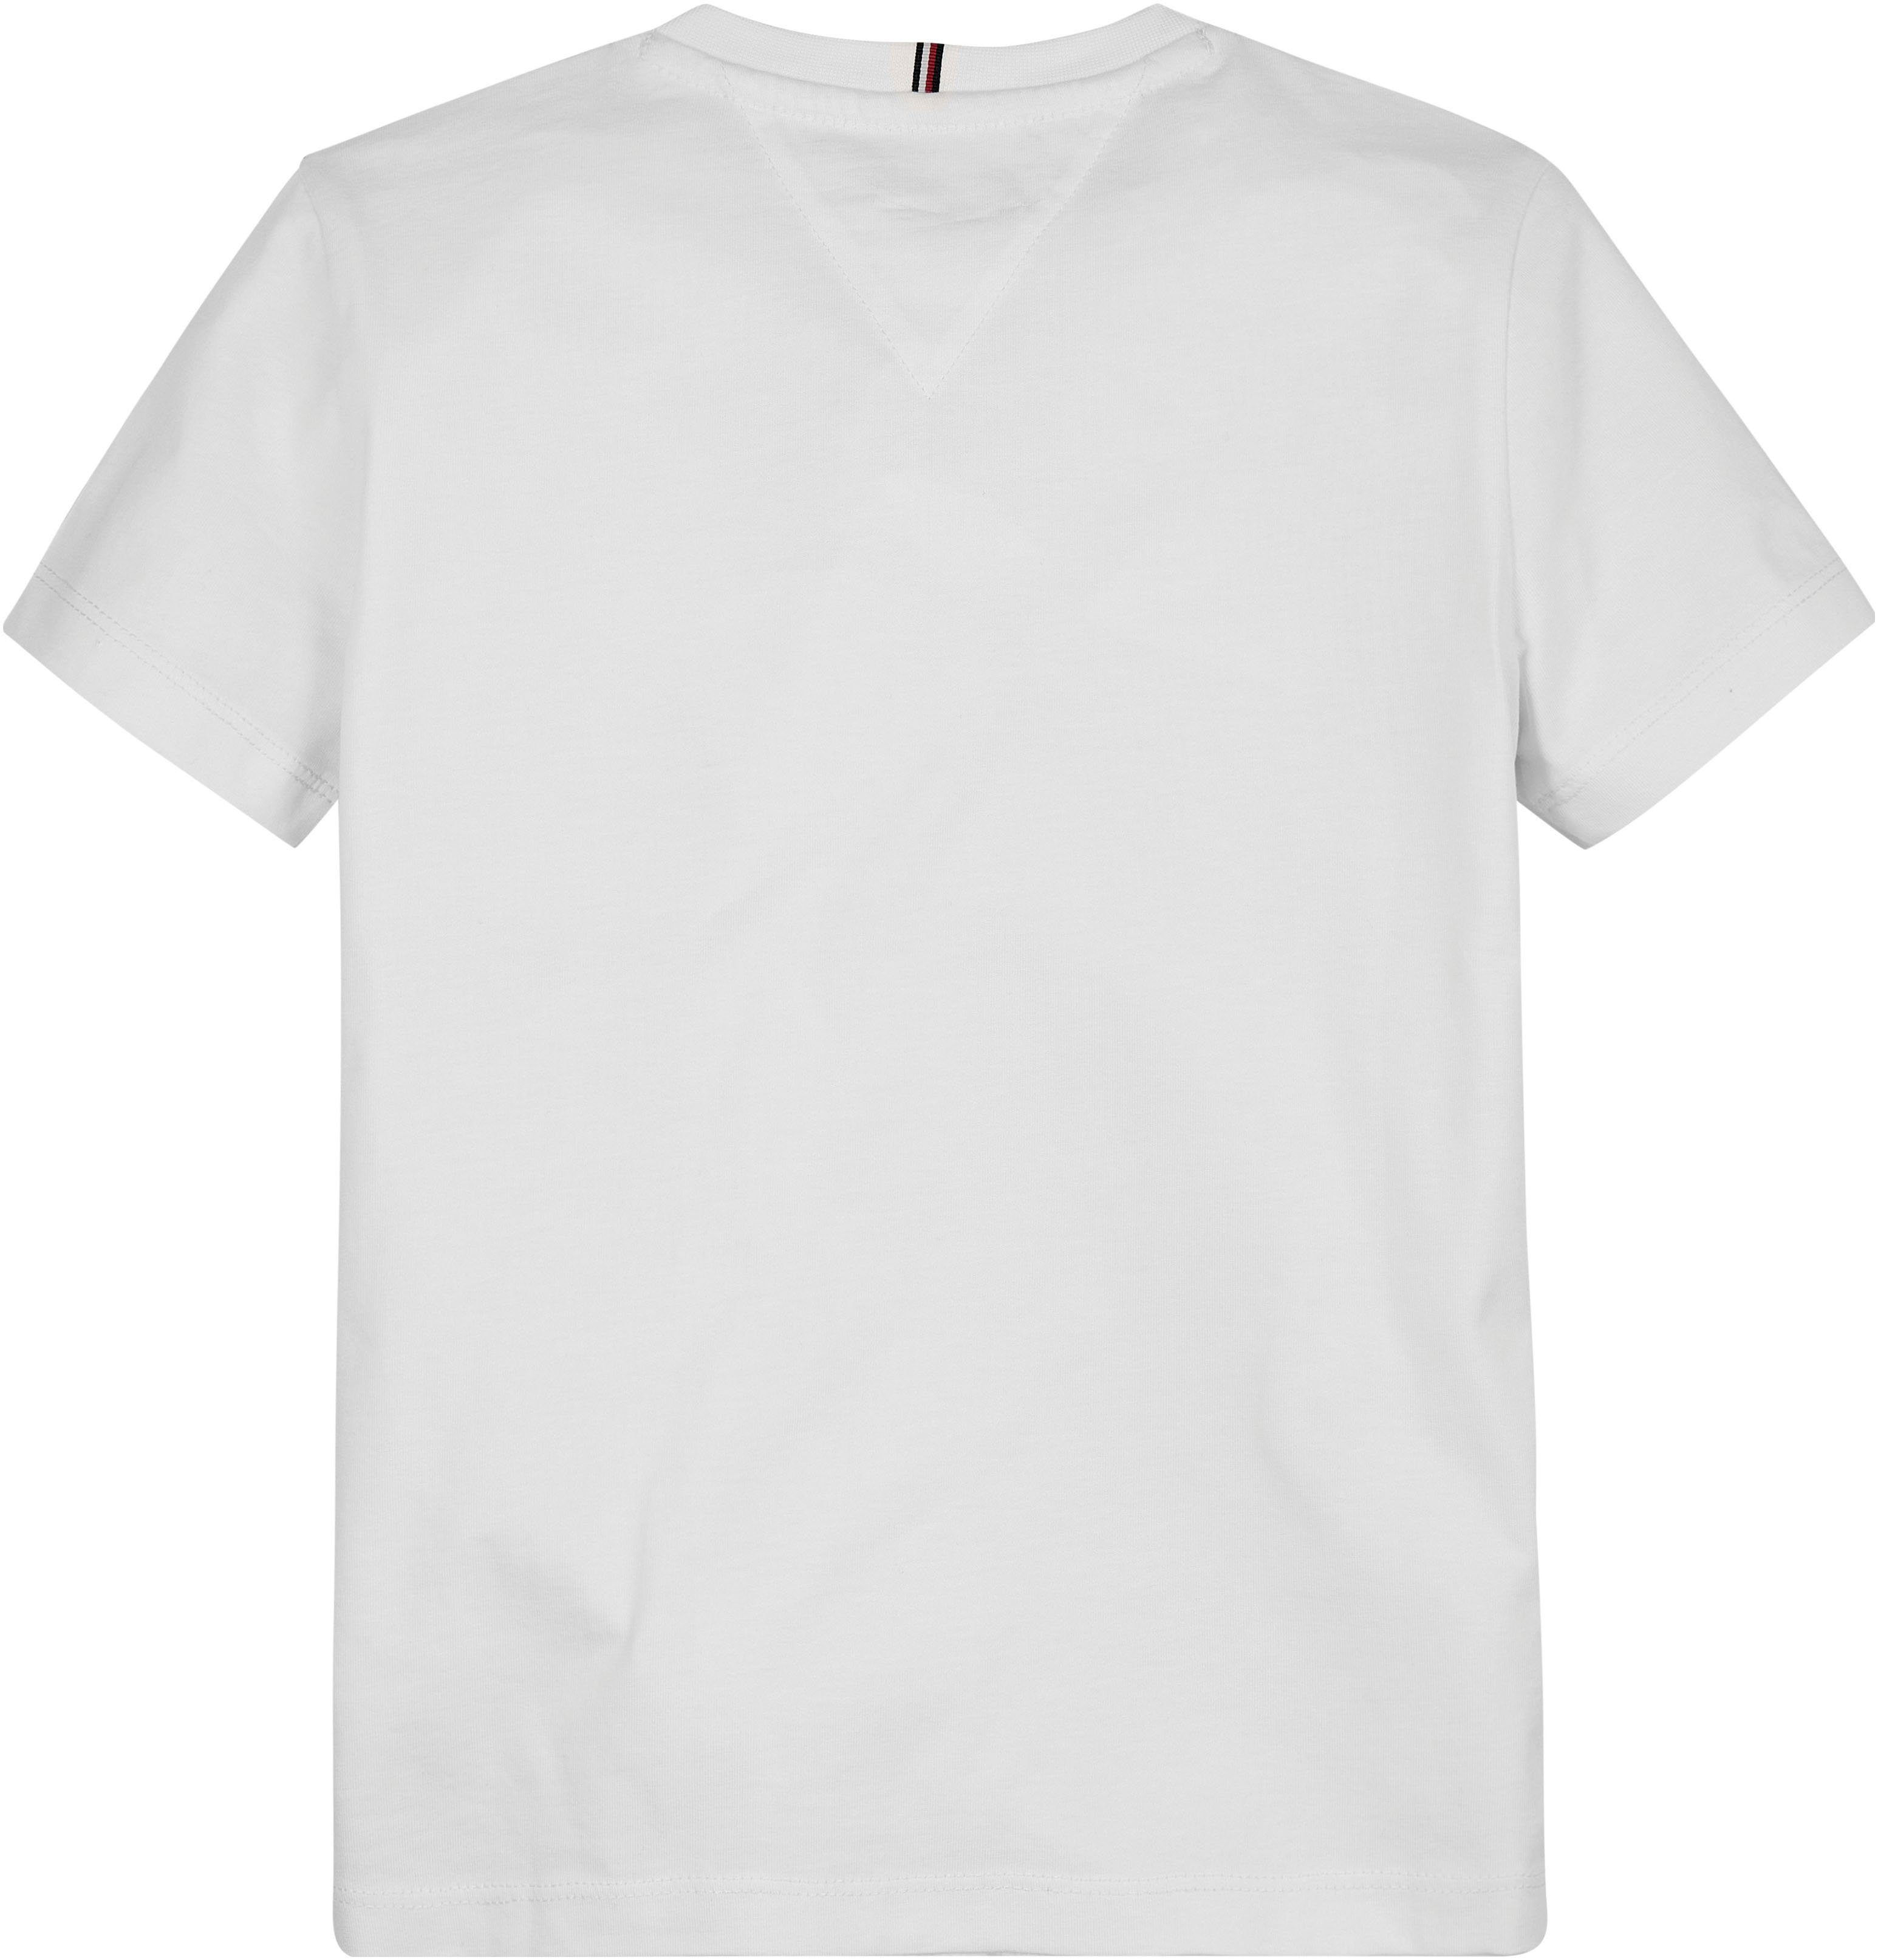 FOIL mit S/S PRINT MONOTYPE Folienprint TEE white Tommy Hilfiger T-Shirt